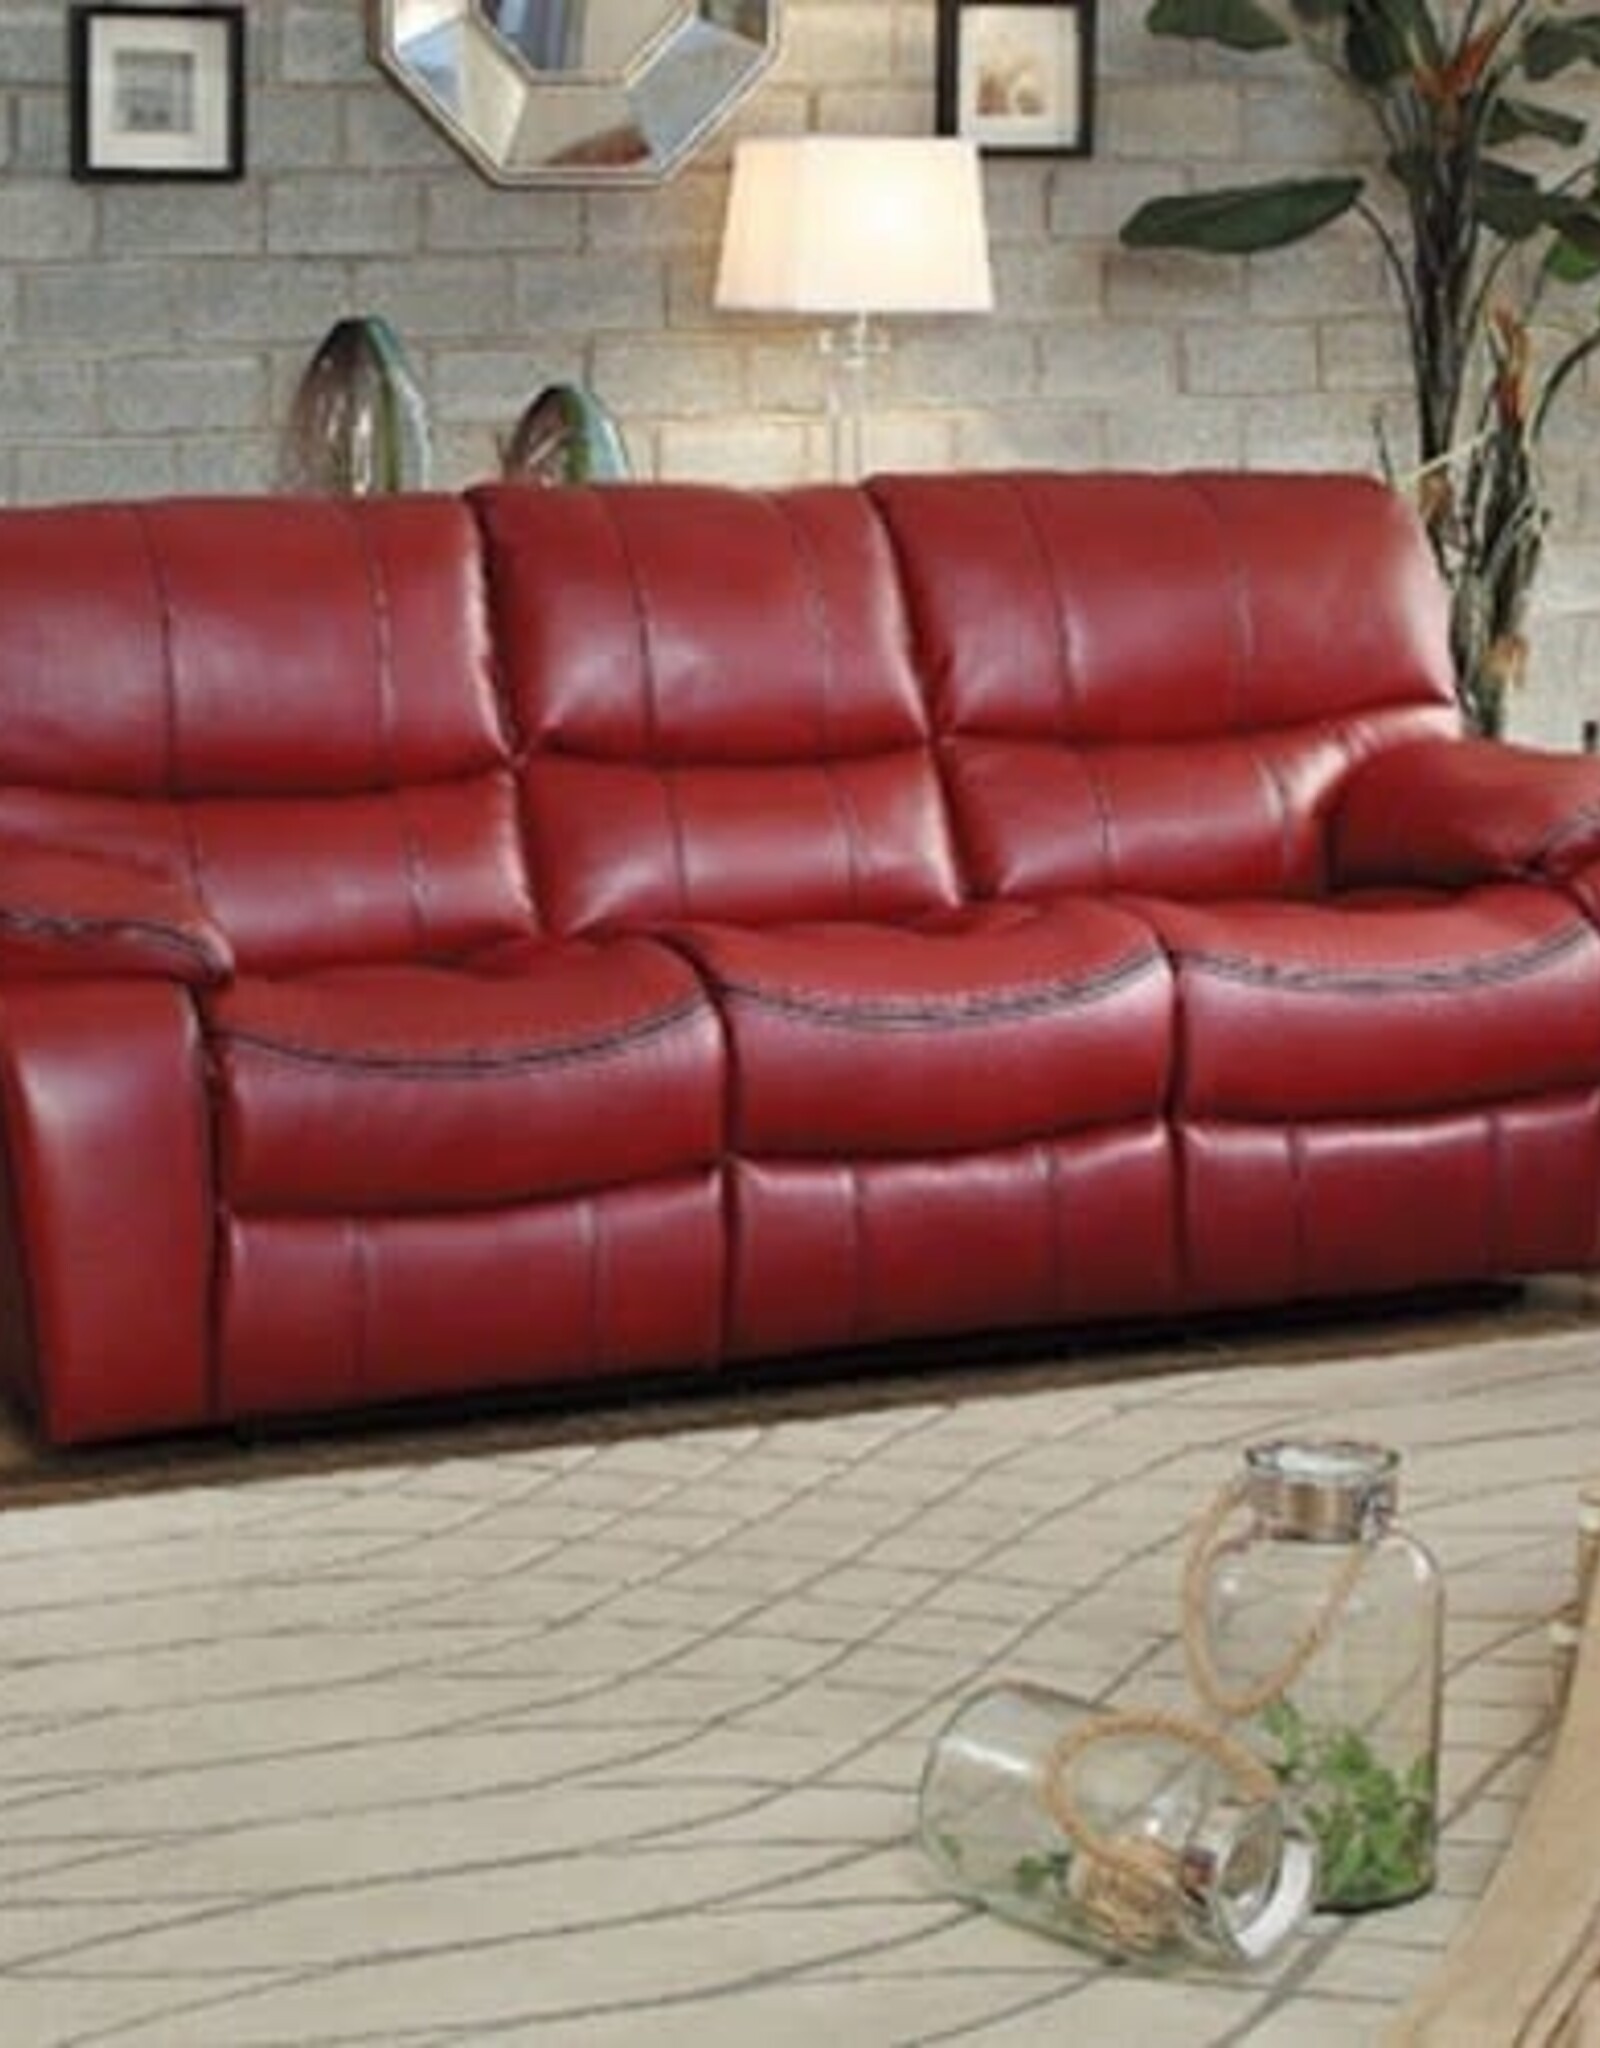 8480 Red Sofa